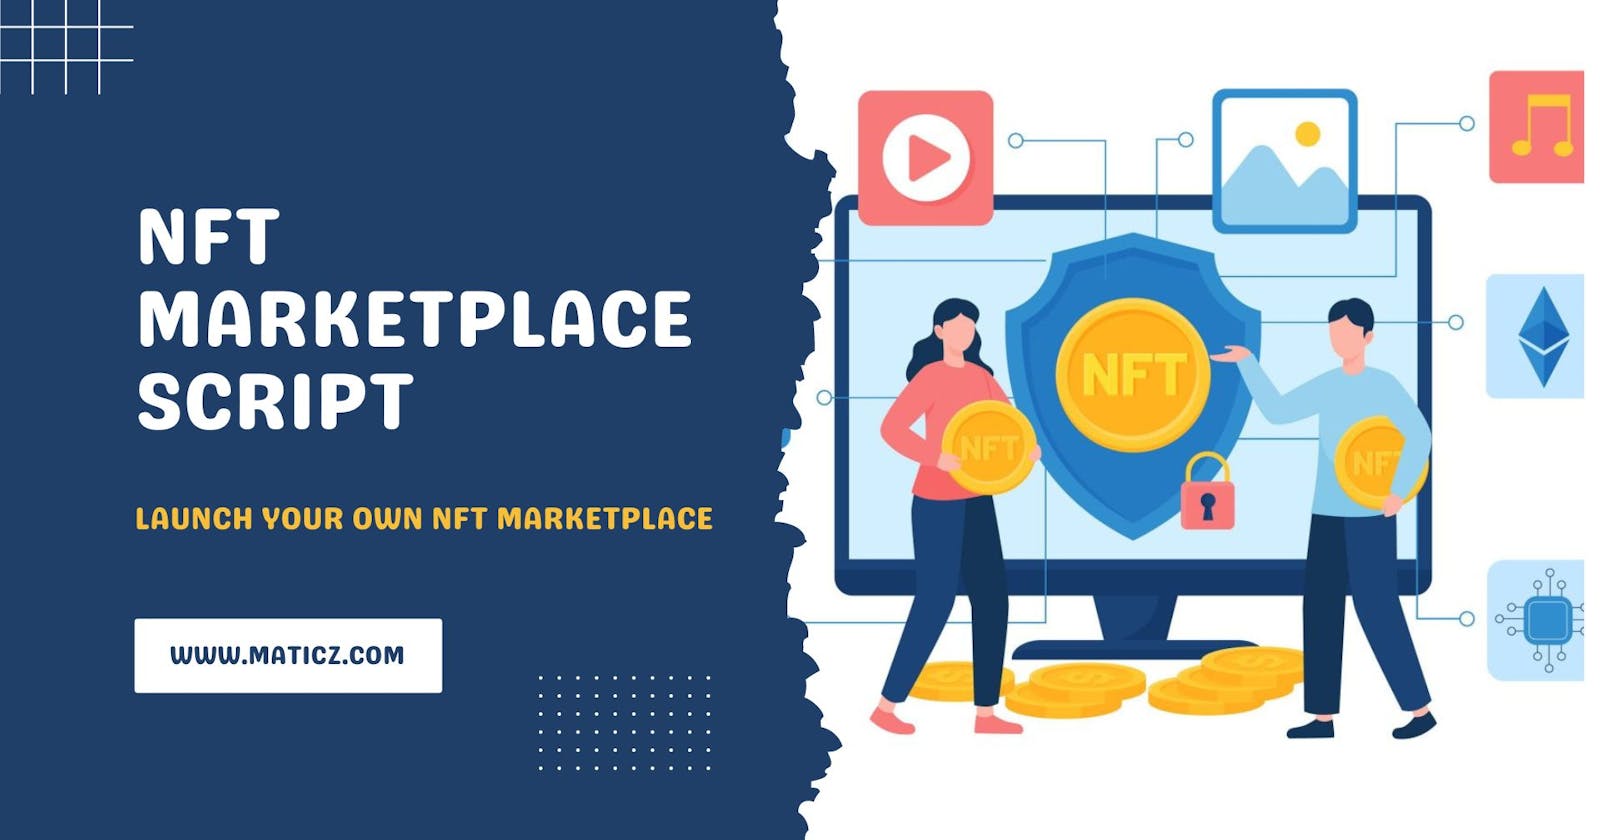 NFT Marketplace Script- To Launch Your Own NFT Marketplace